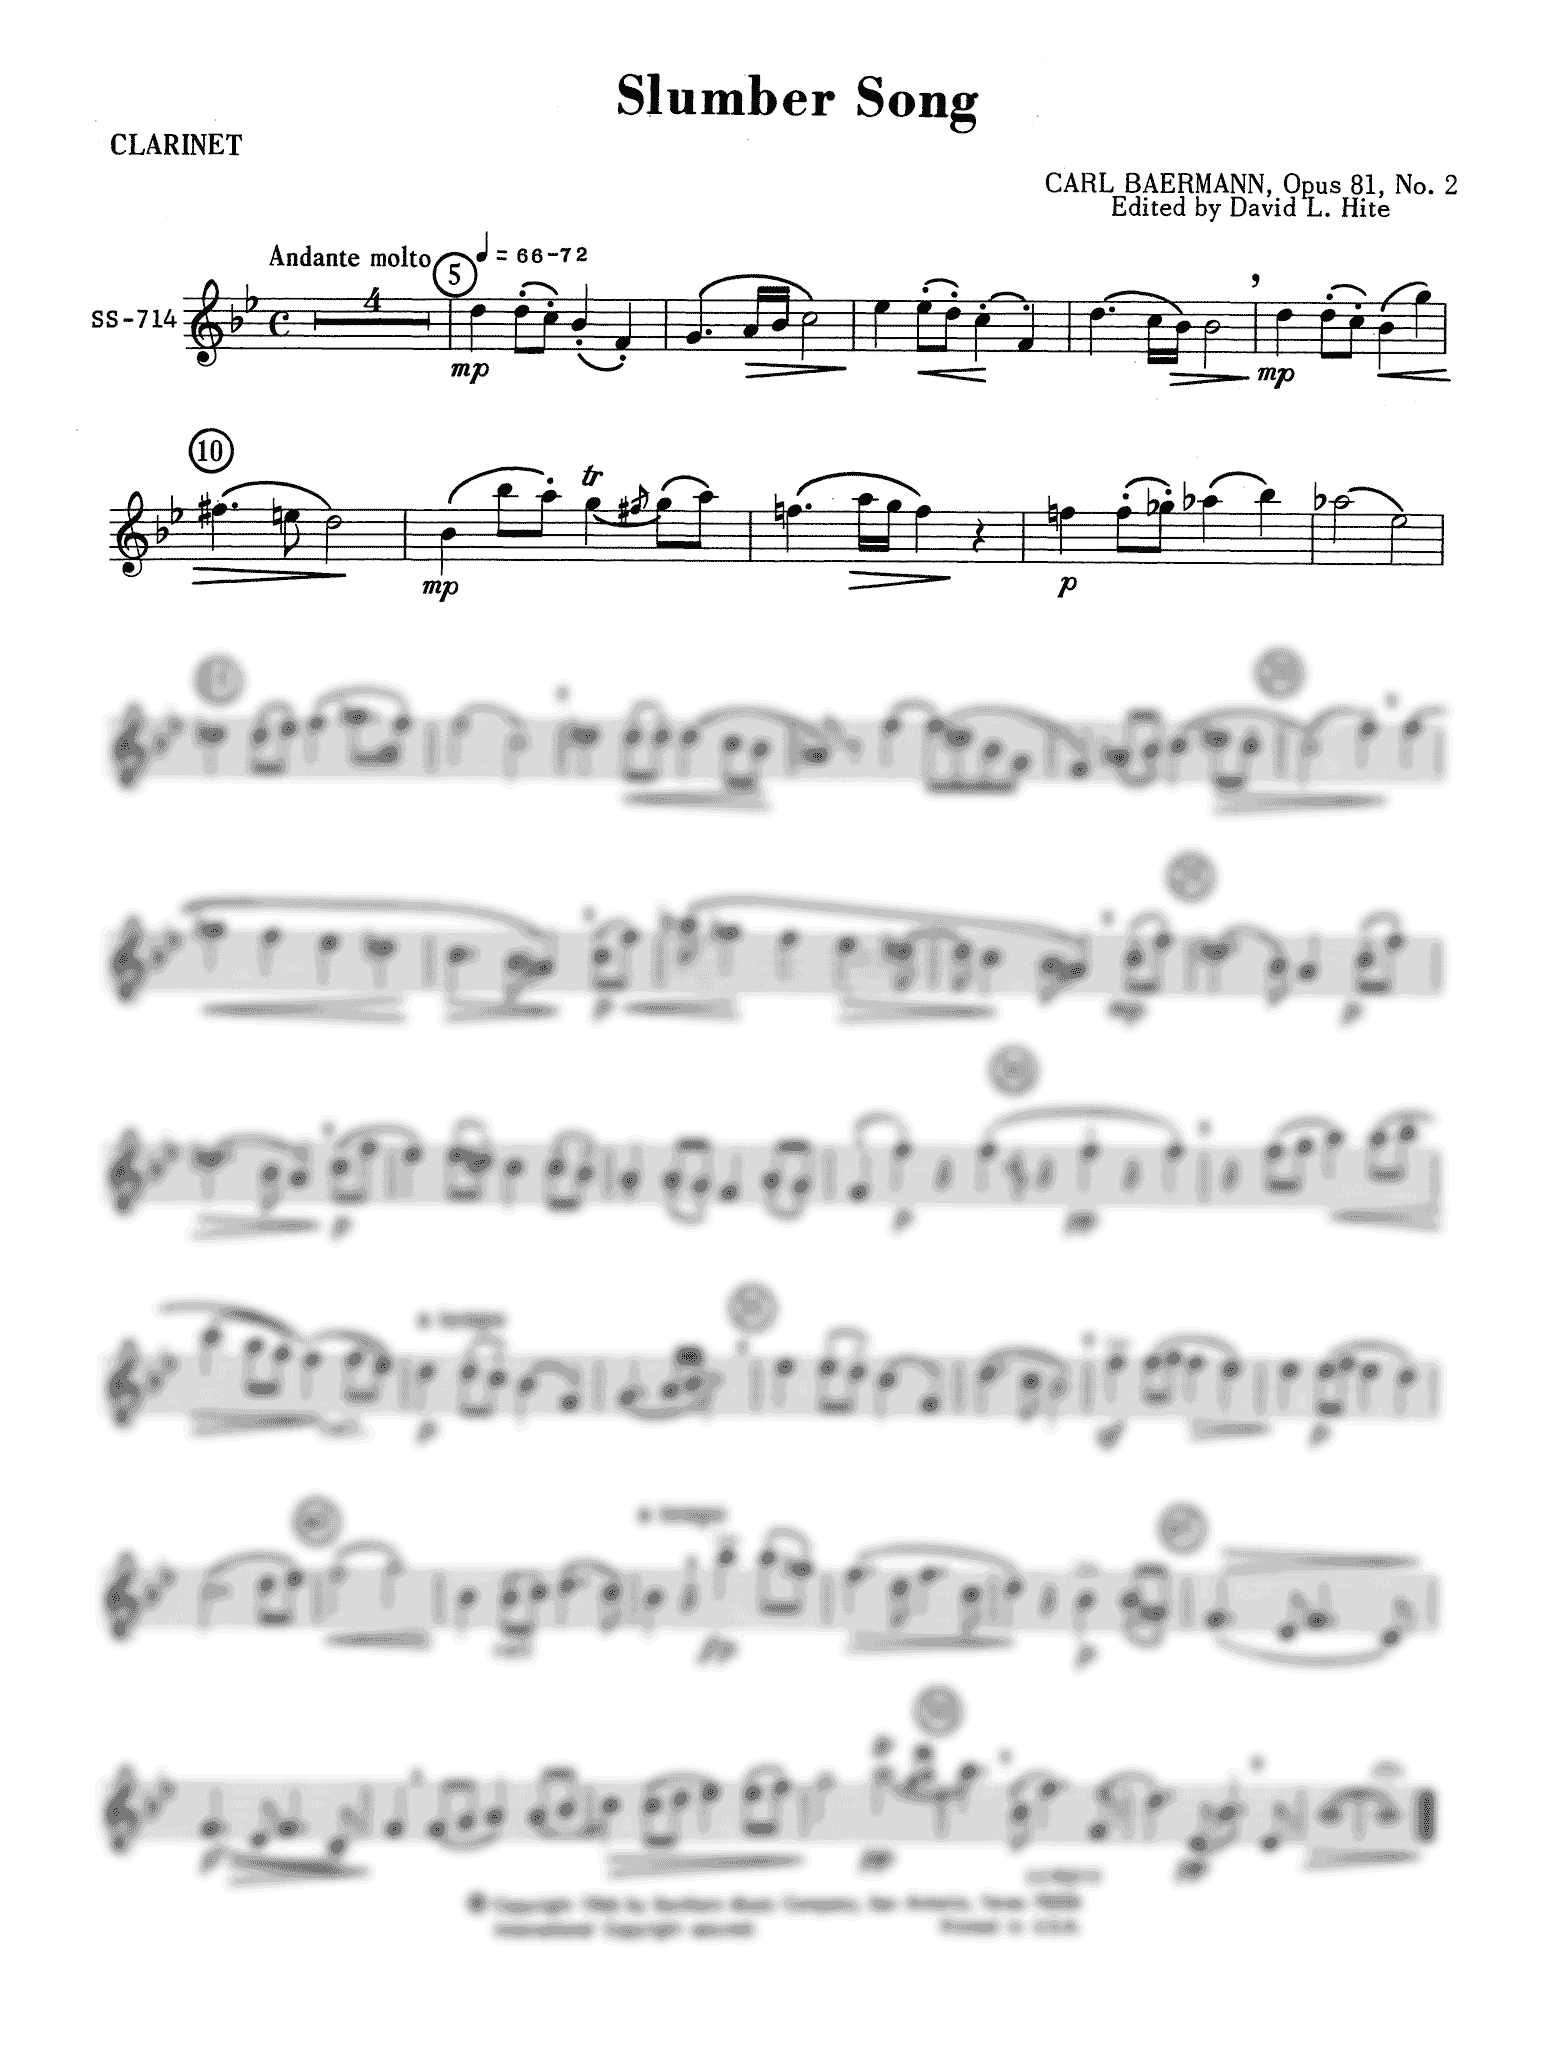 Baermann Slumber Song, Op. 81 No. 2 Clarinet part